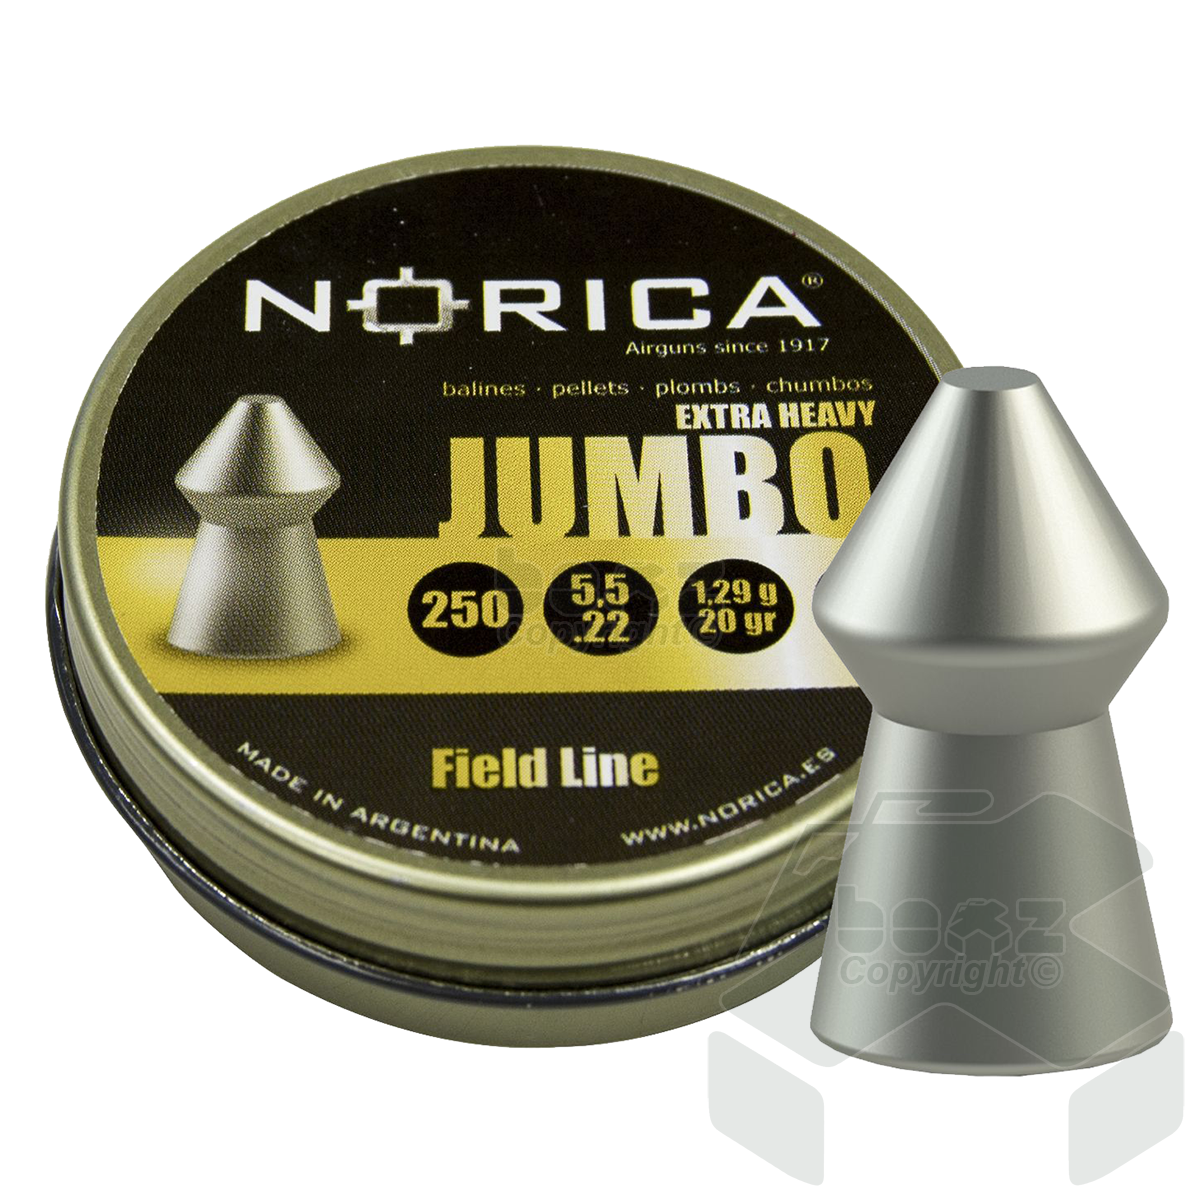 Norica Jumbo Extra Heavy Pellets Tin of 250 - 5.50mm .22 Cal